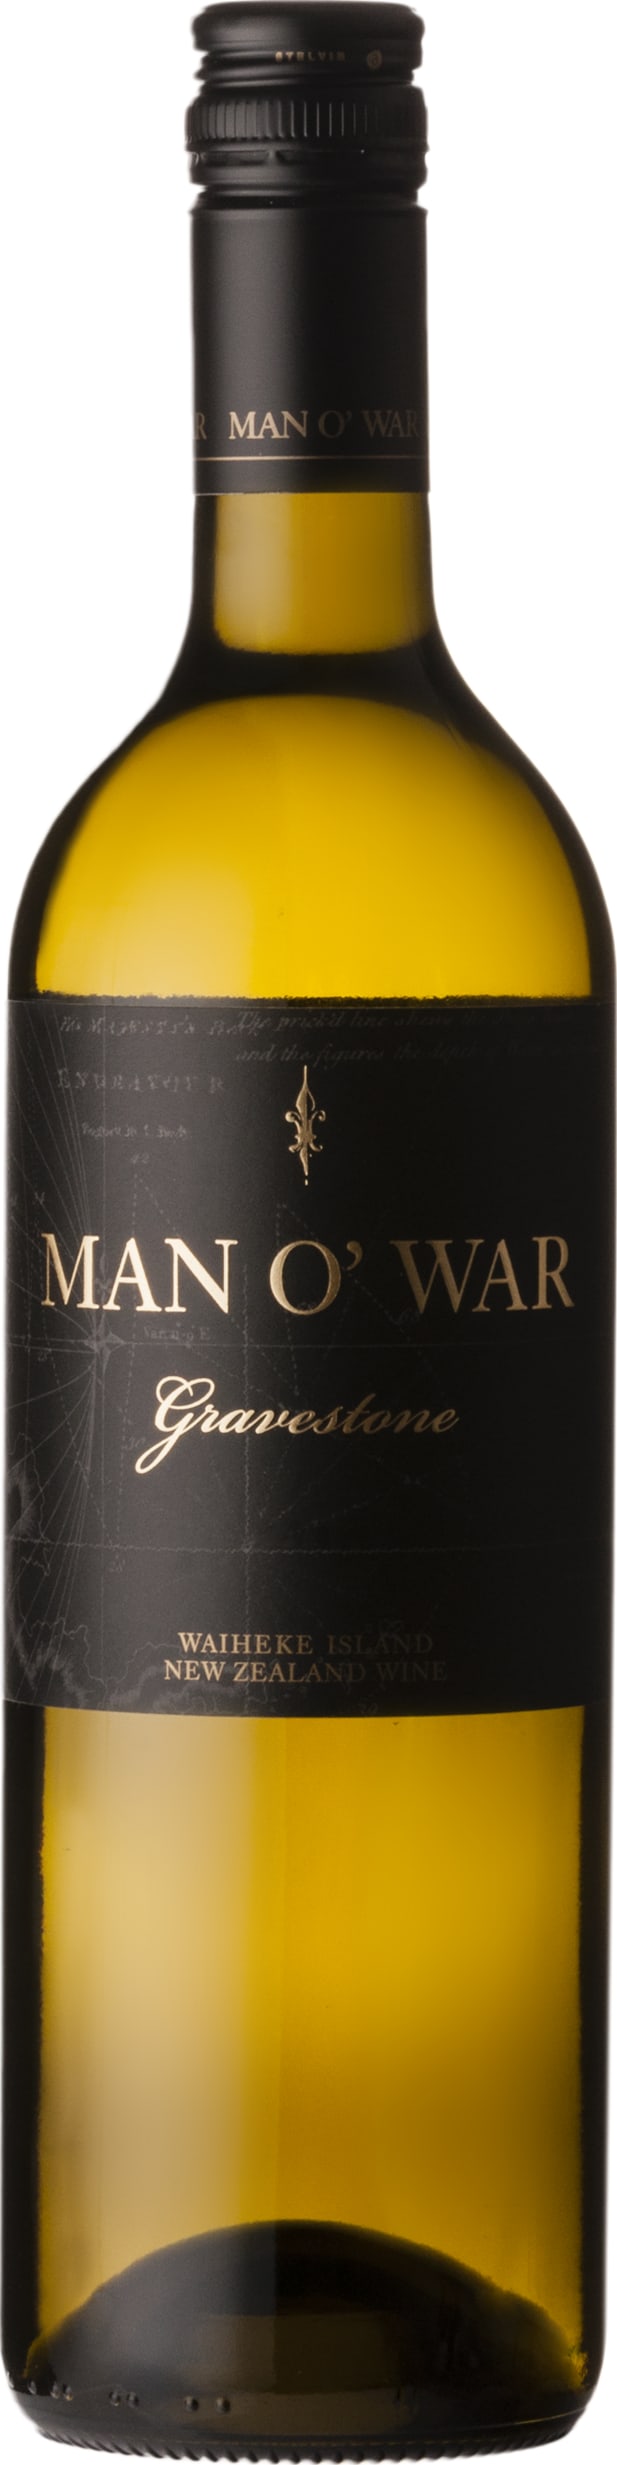 Man O' War Gravestone Sauvignon Blanc Semillon 2019 75cl - Buy Man O' War Wines from GREAT WINES DIRECT wine shop